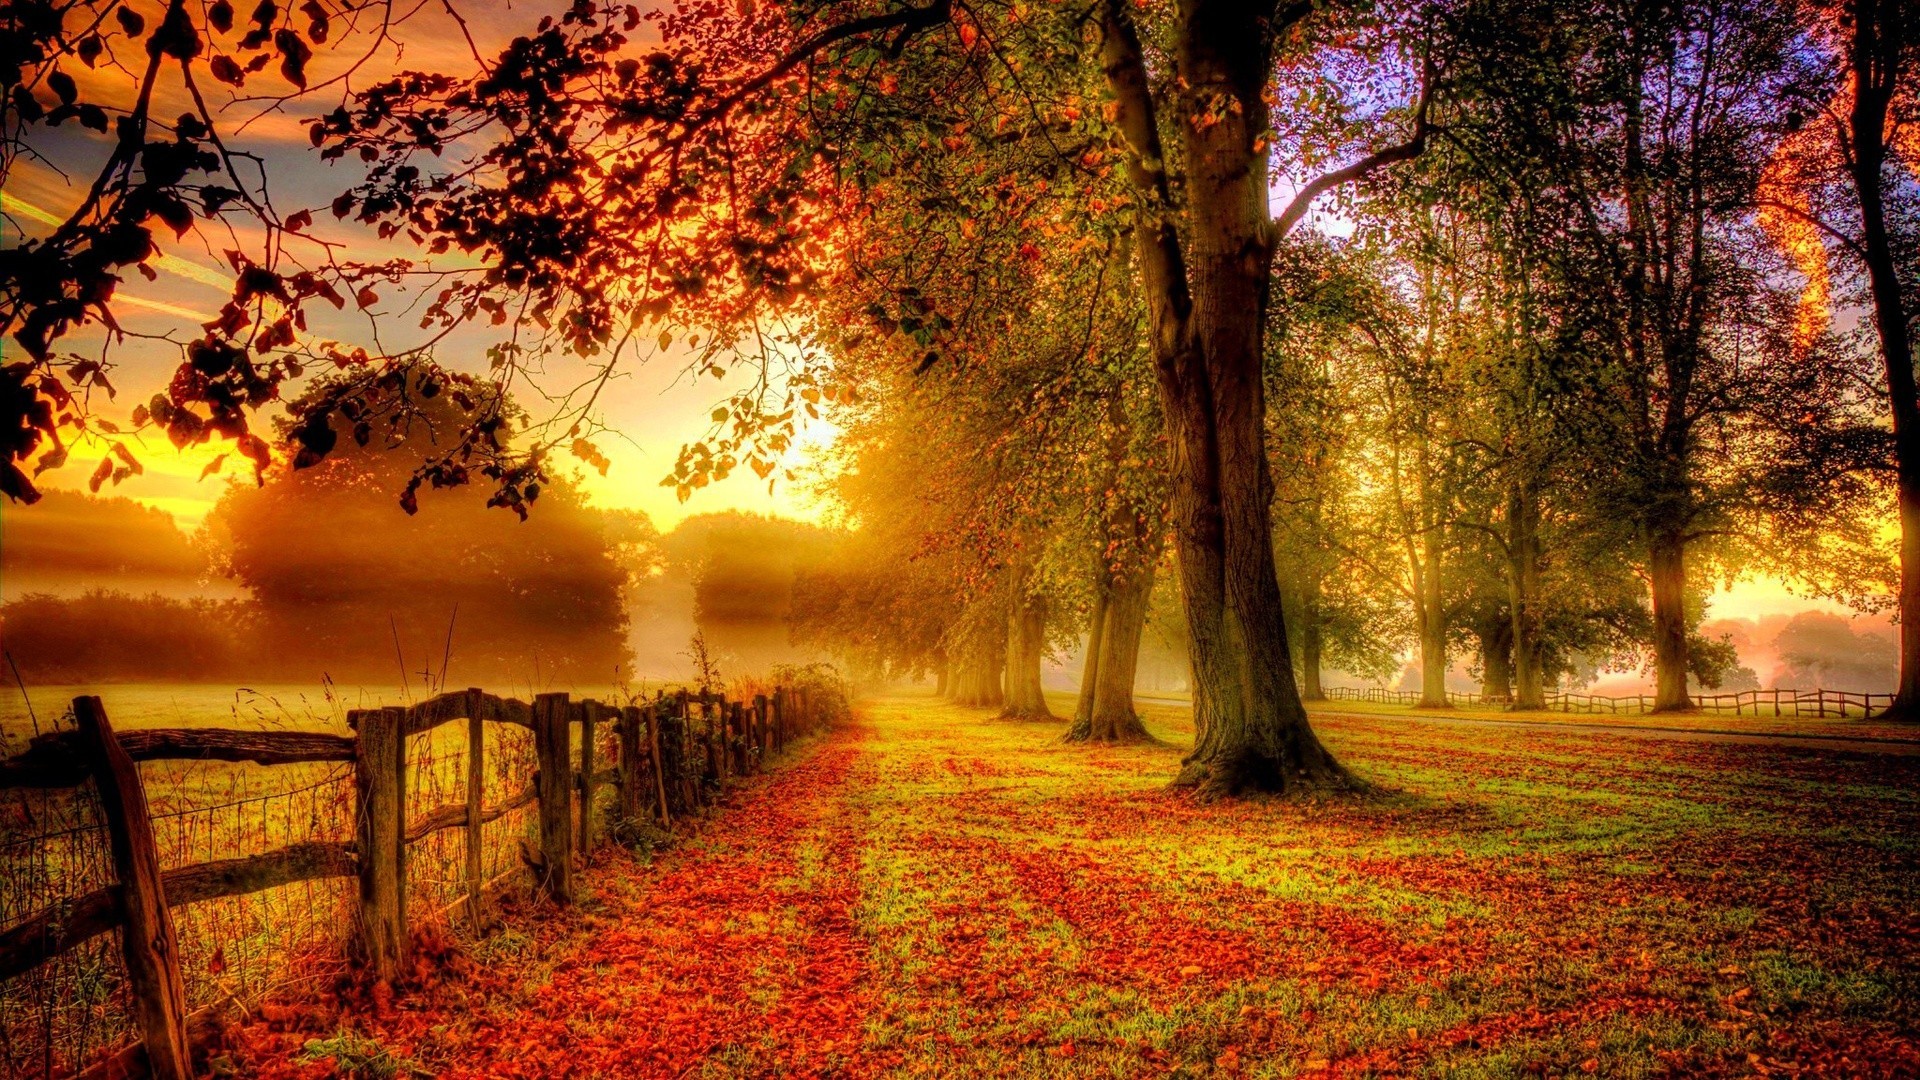 1920x1080 Fences Tag - Wondrous Autumn Landscape Sunset Fields Fences Trees Leaves  Park Scenery Red Road Fence